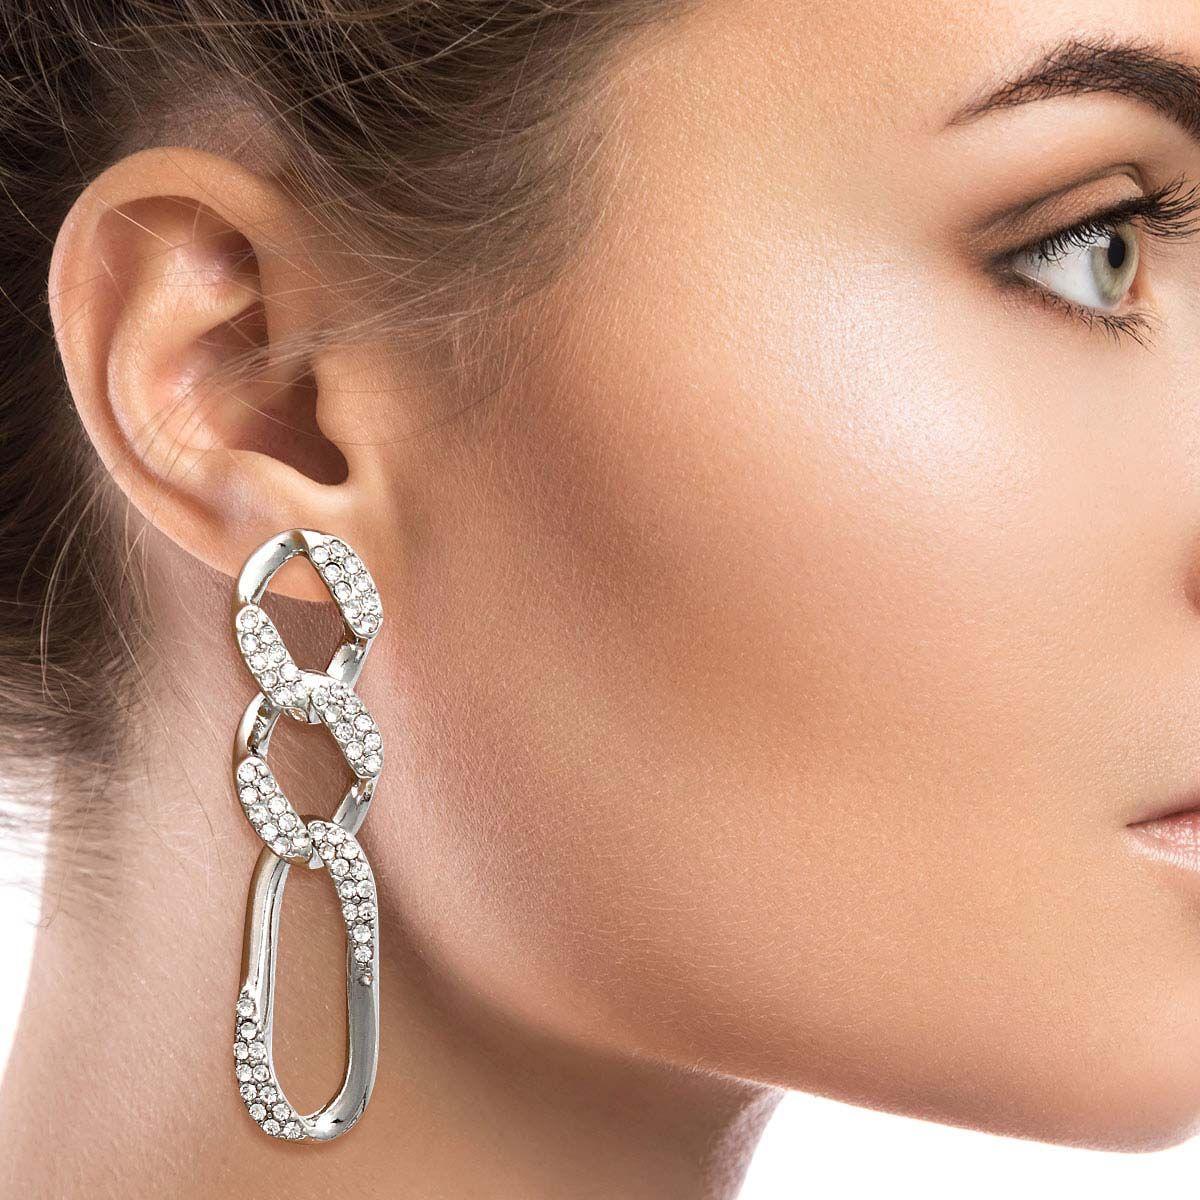 Glamorous Rhinestone Silver-Plated Chain Link Earrings - Shop Now!